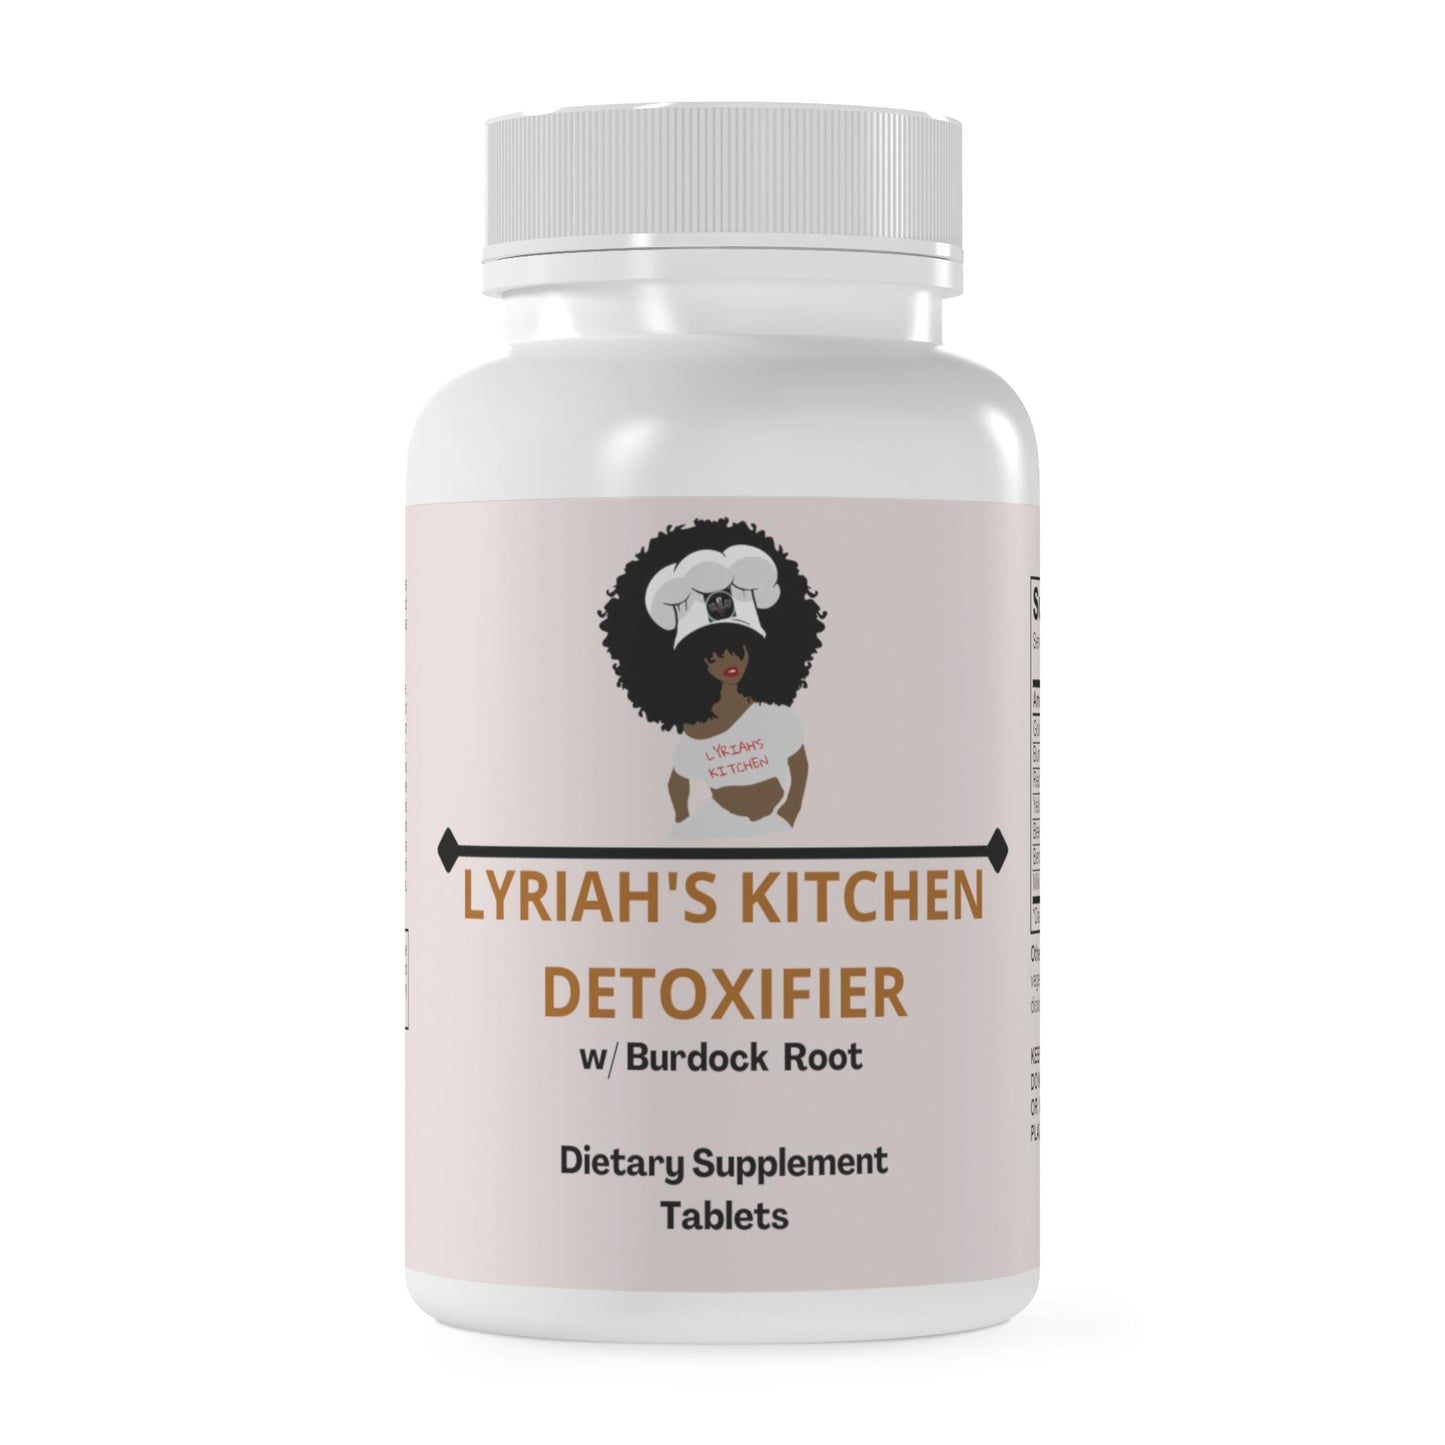 Lyriah's Kitchen Detoxifier (Light Level Cleanse/Detox)